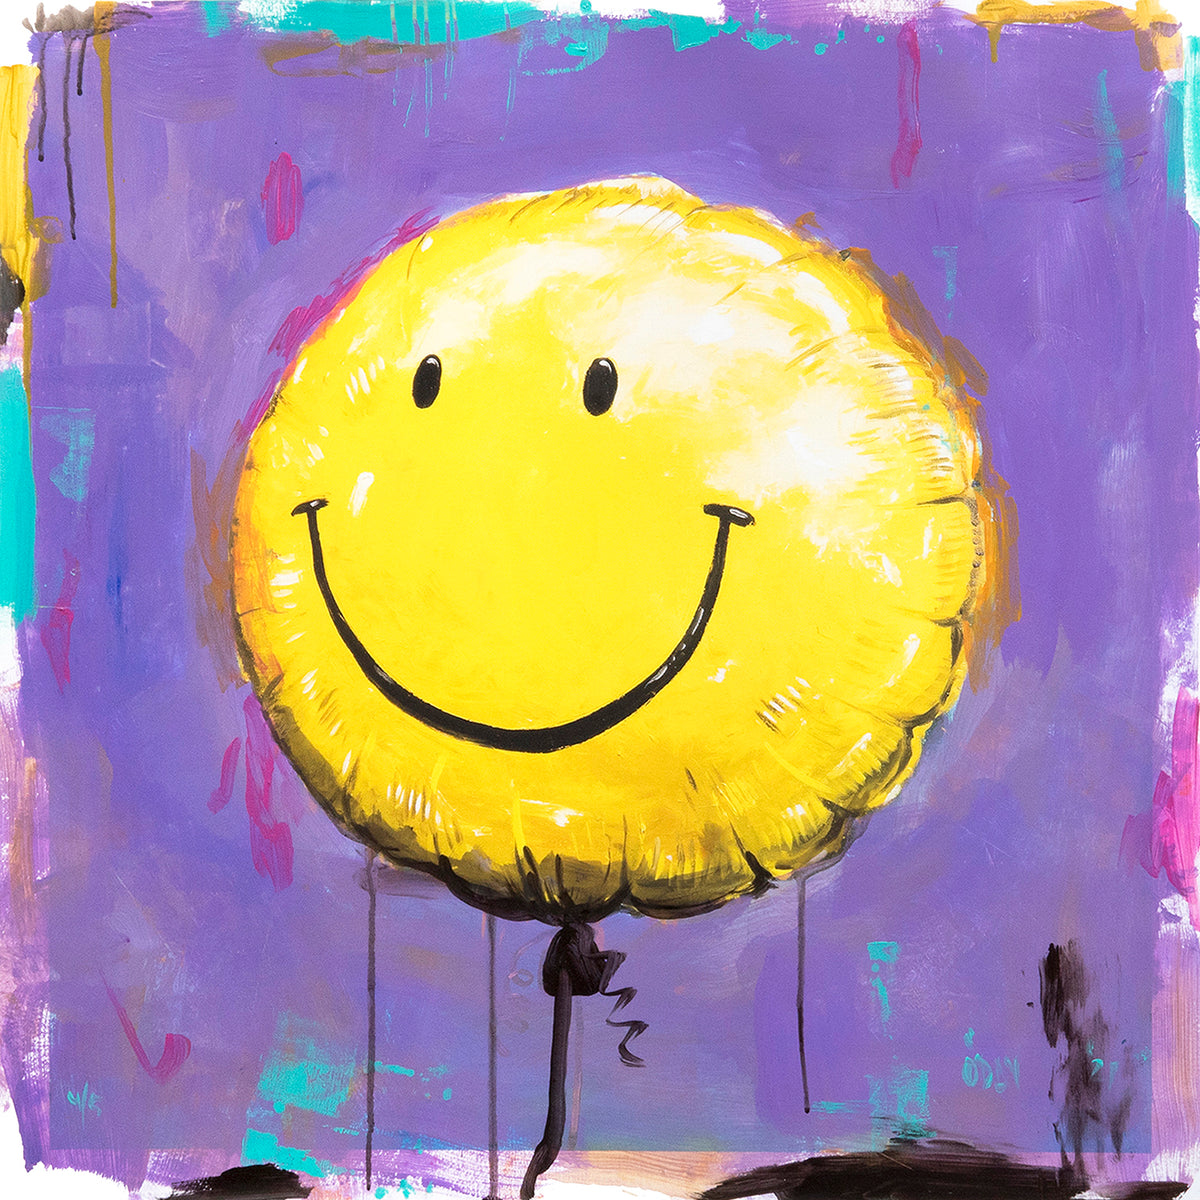 Adam J. O&#39;Day &quot;Smiley Face Balloon: Lavender&quot; - Unique Hand-Painted Print - 24 x 24&quot;